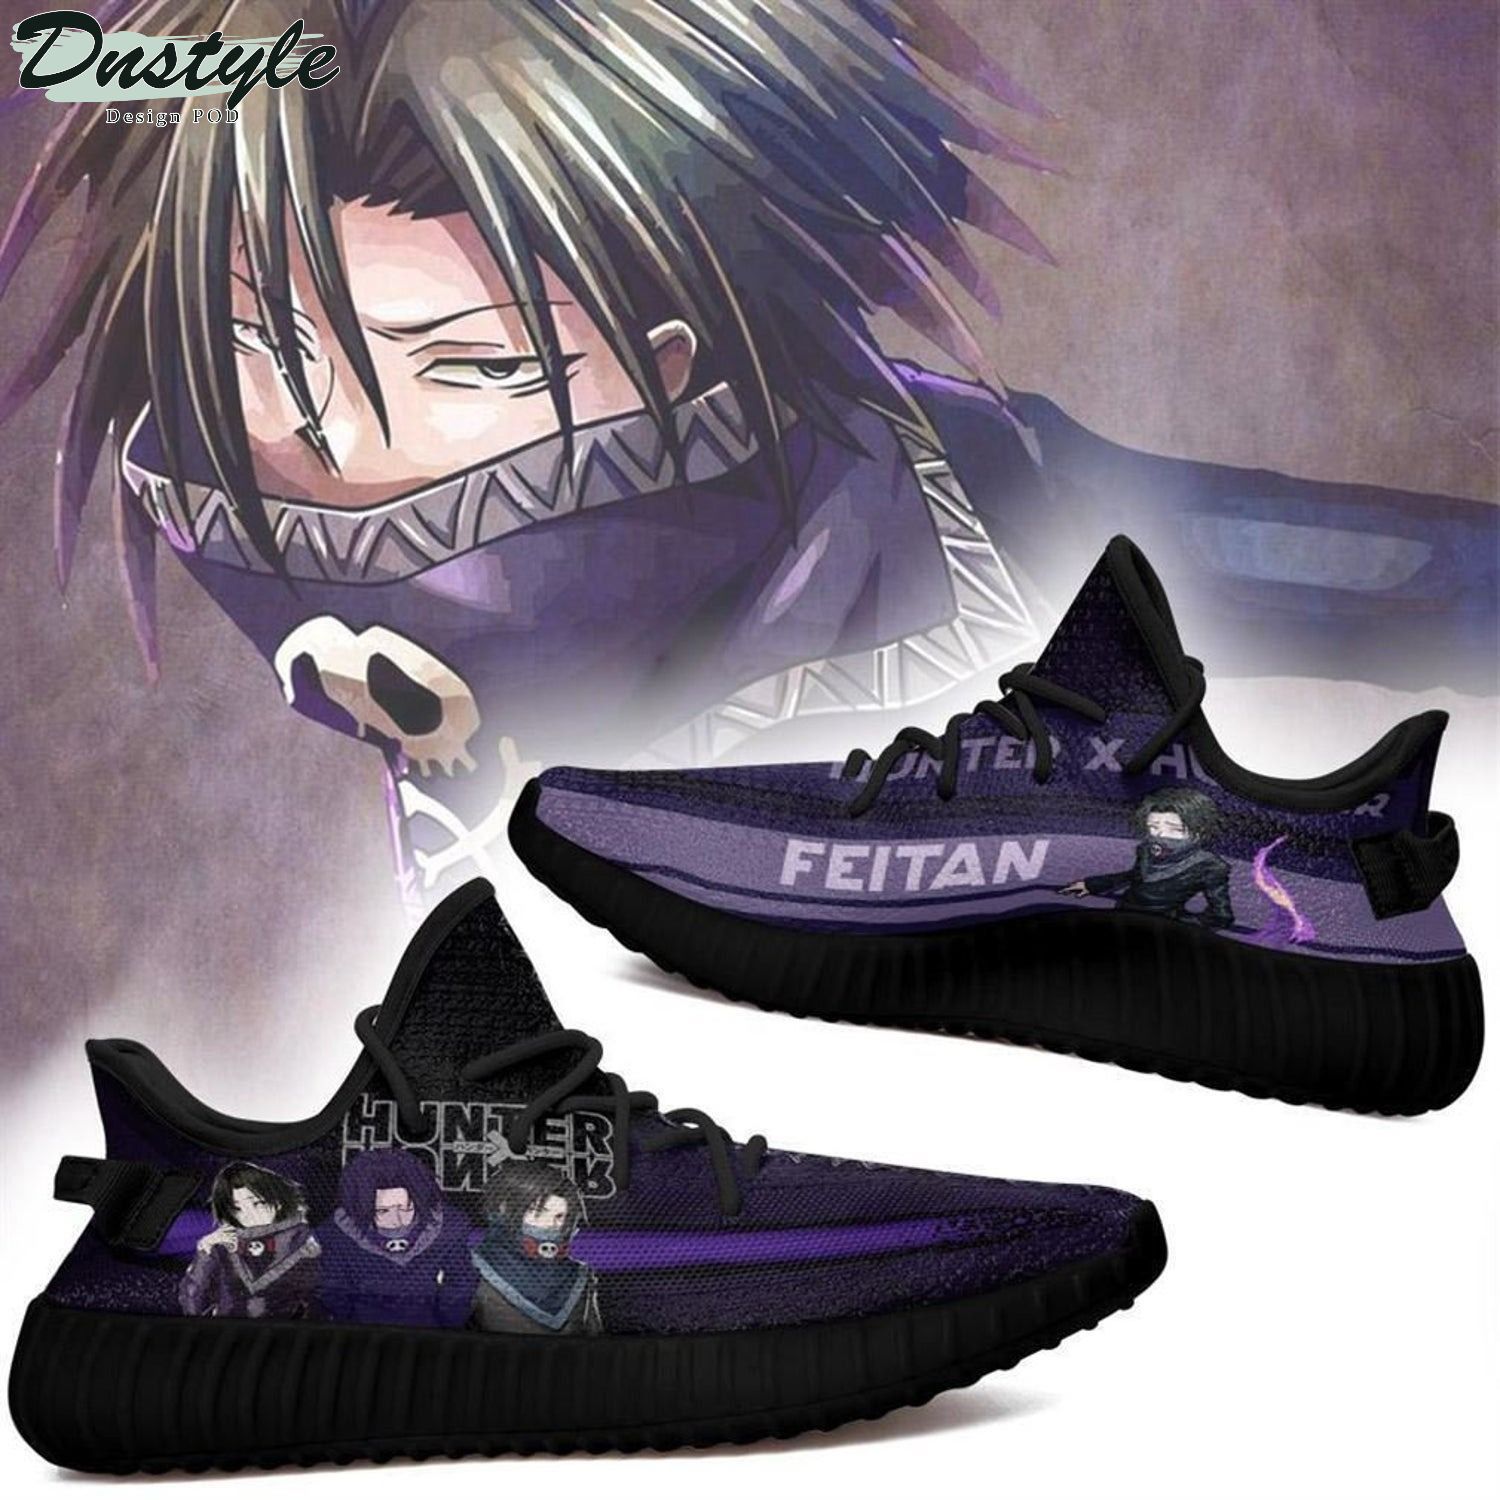 Feitan Hunter Anime Black Yeezy Shoes Sneakers